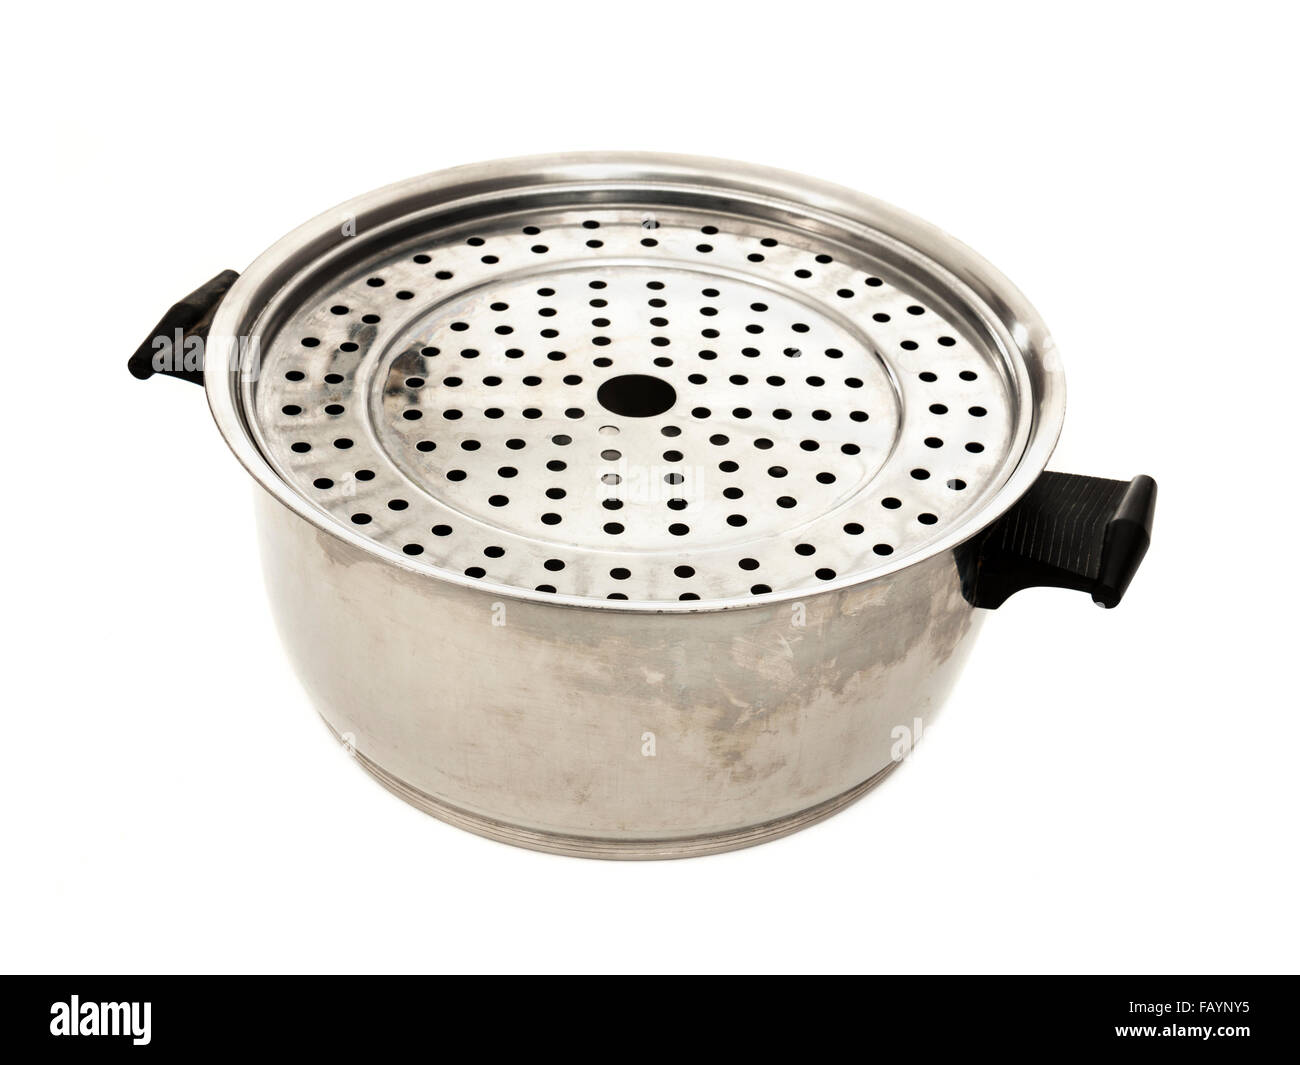 Rena-ware waterless stainless cookware Stock Photo - Alamy